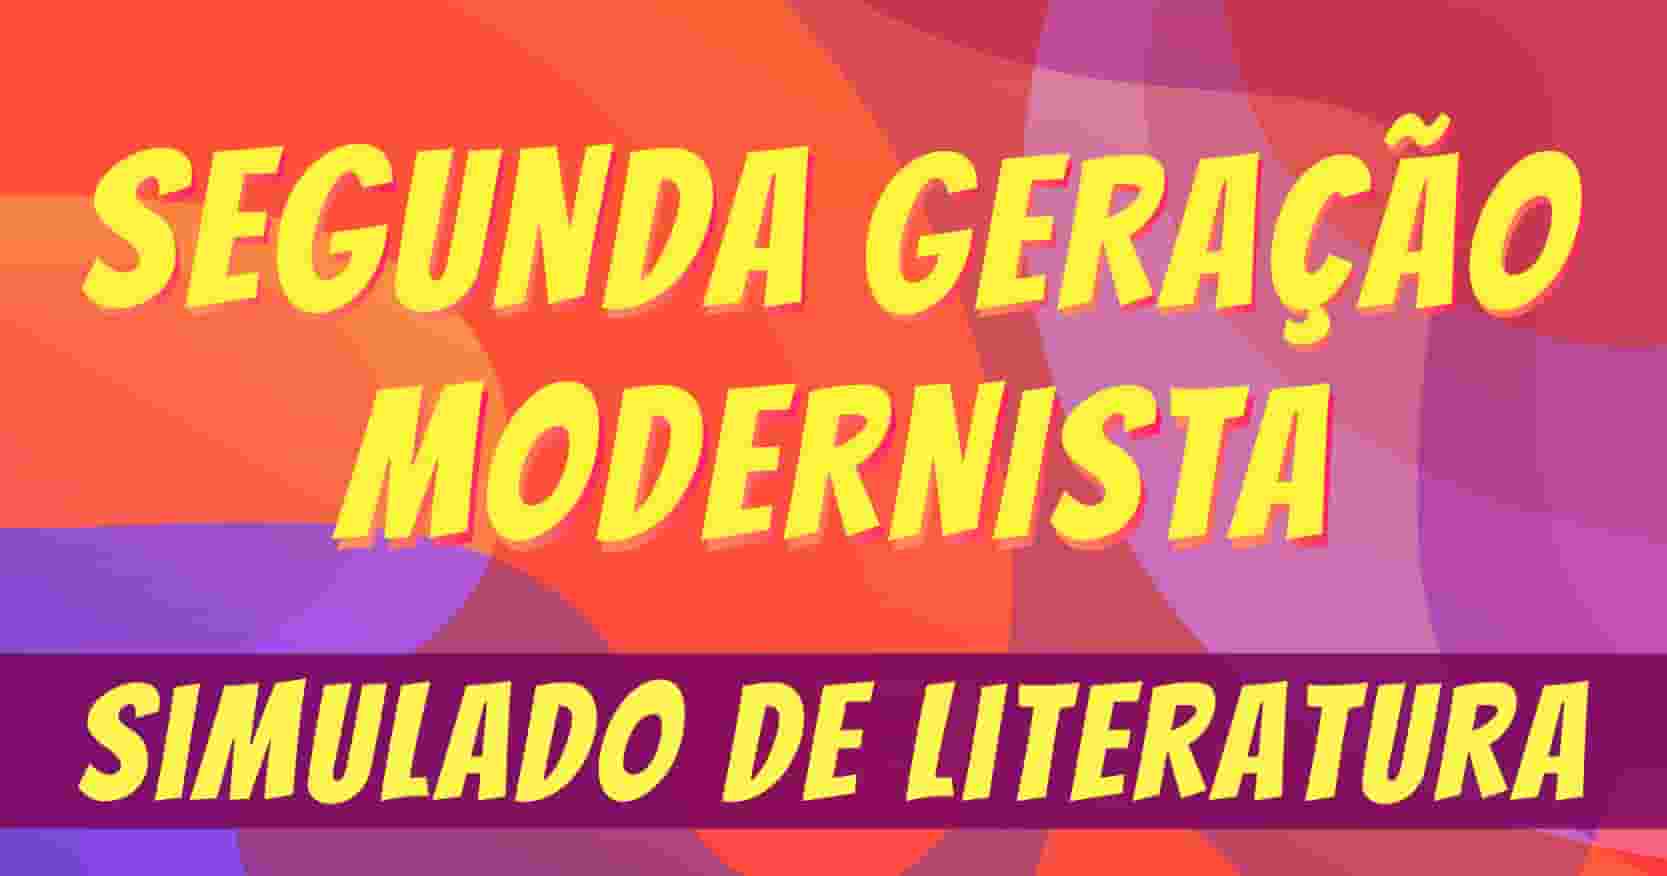 Lista de Exercícios sobre a segunda fase do Modernismo no Brasil